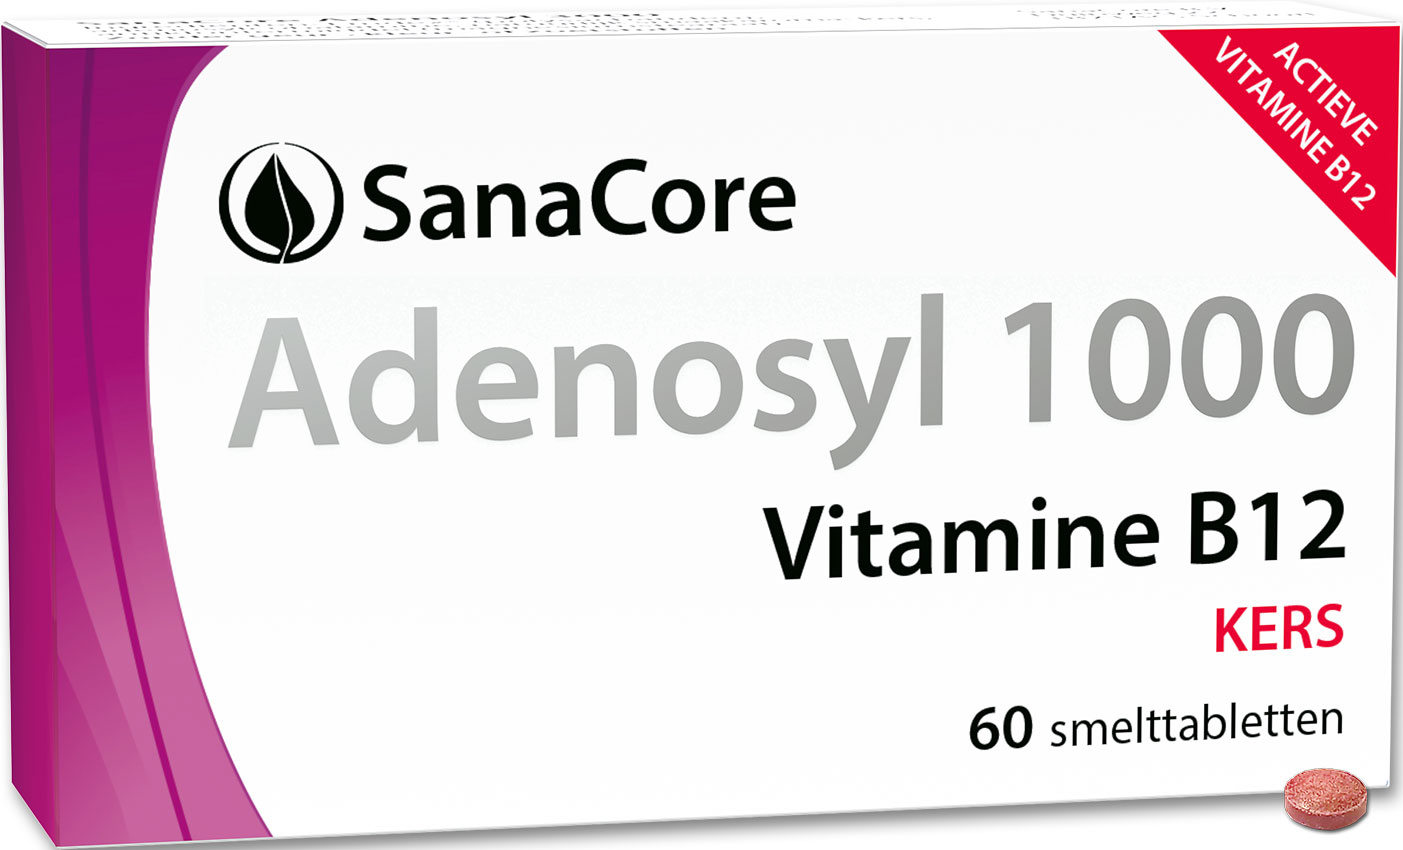 Adenosyl 1000 ZONDER FOLIUMZUUR